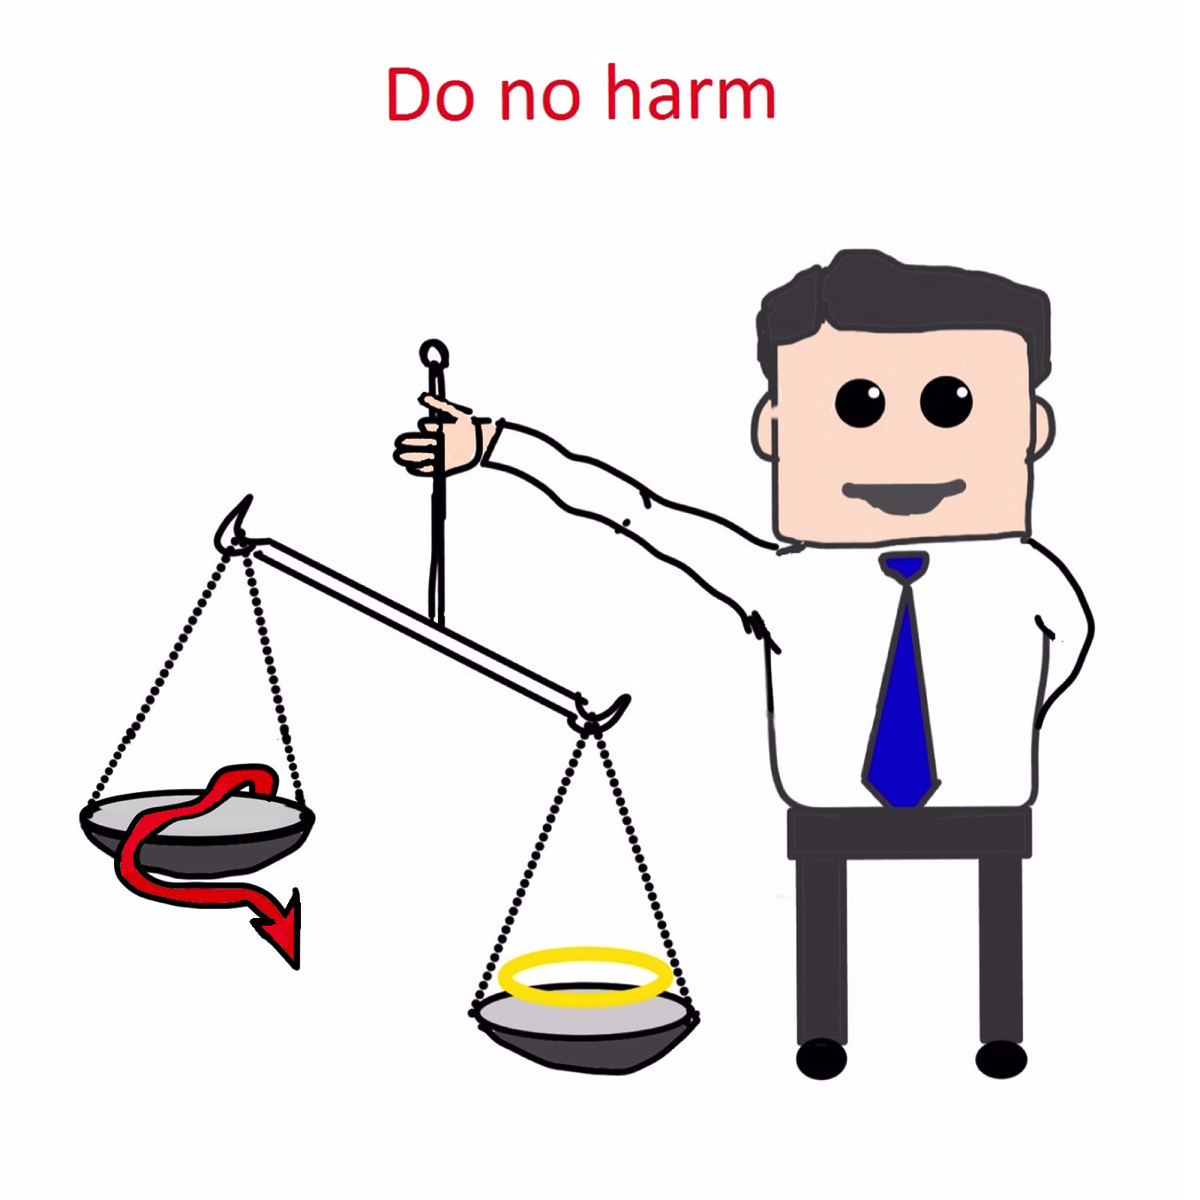 Do no harm pledge